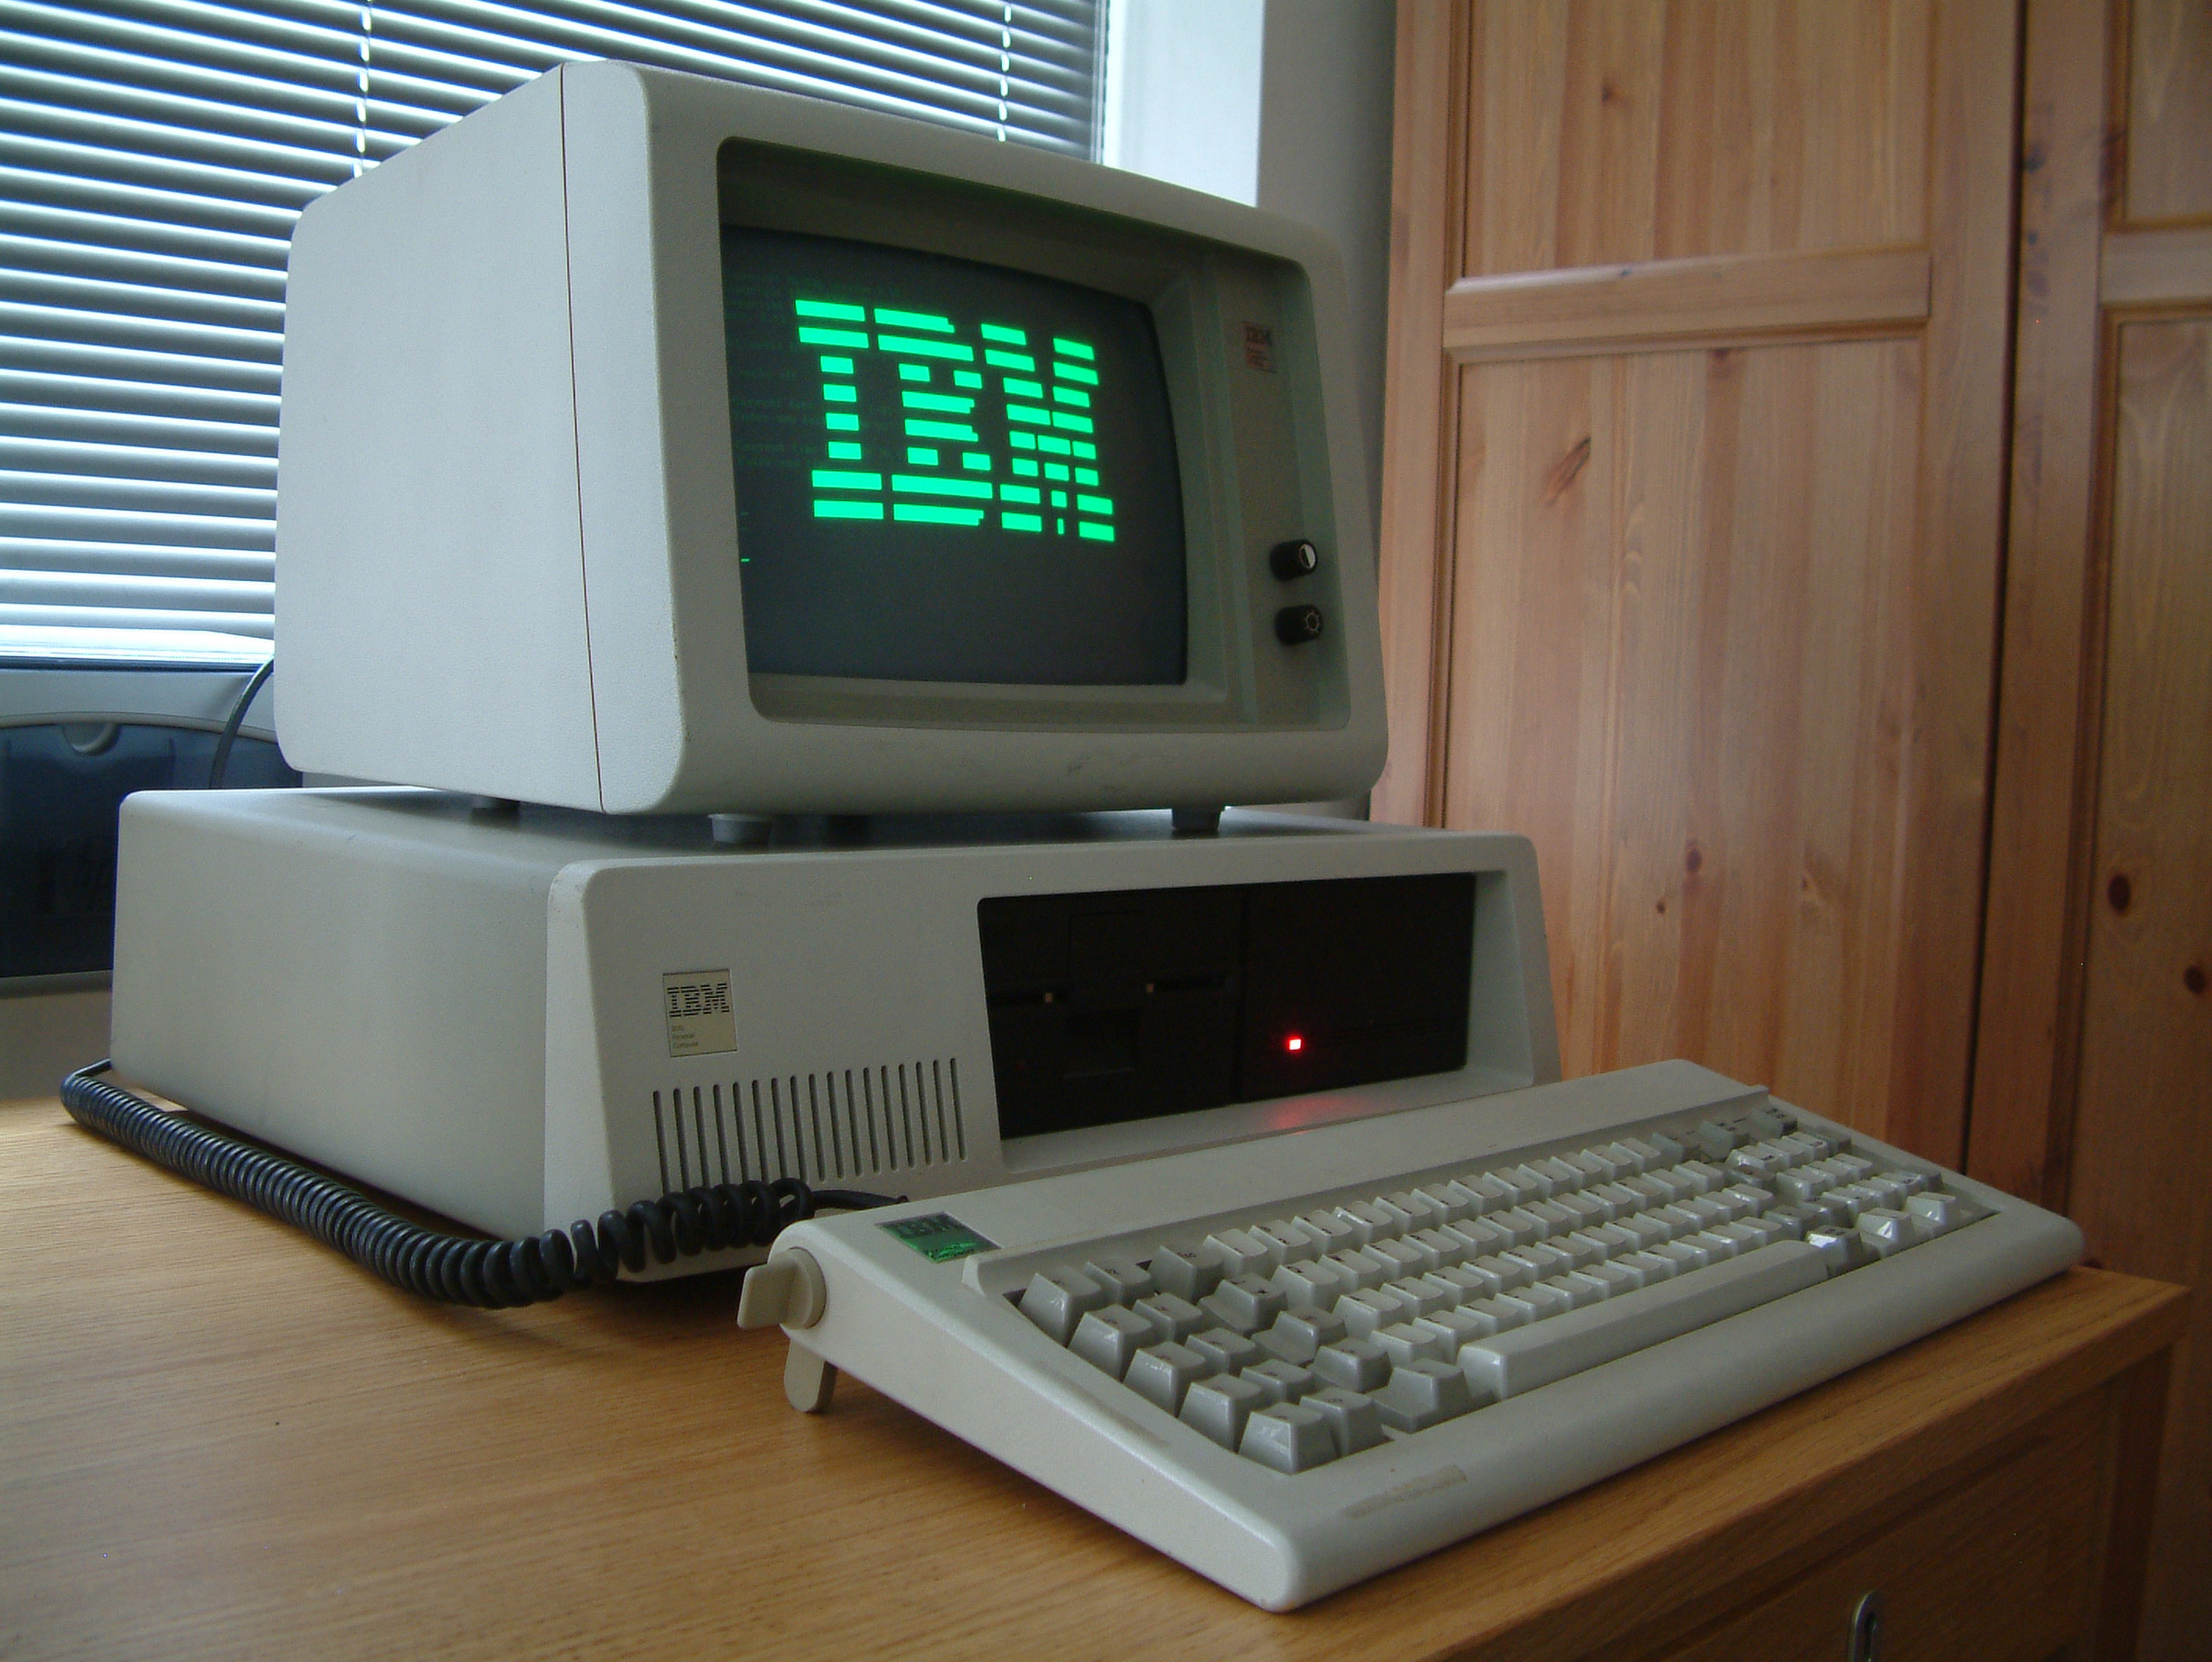 IBM Personal Computer XT - Wikipedia, the free encyclopedia